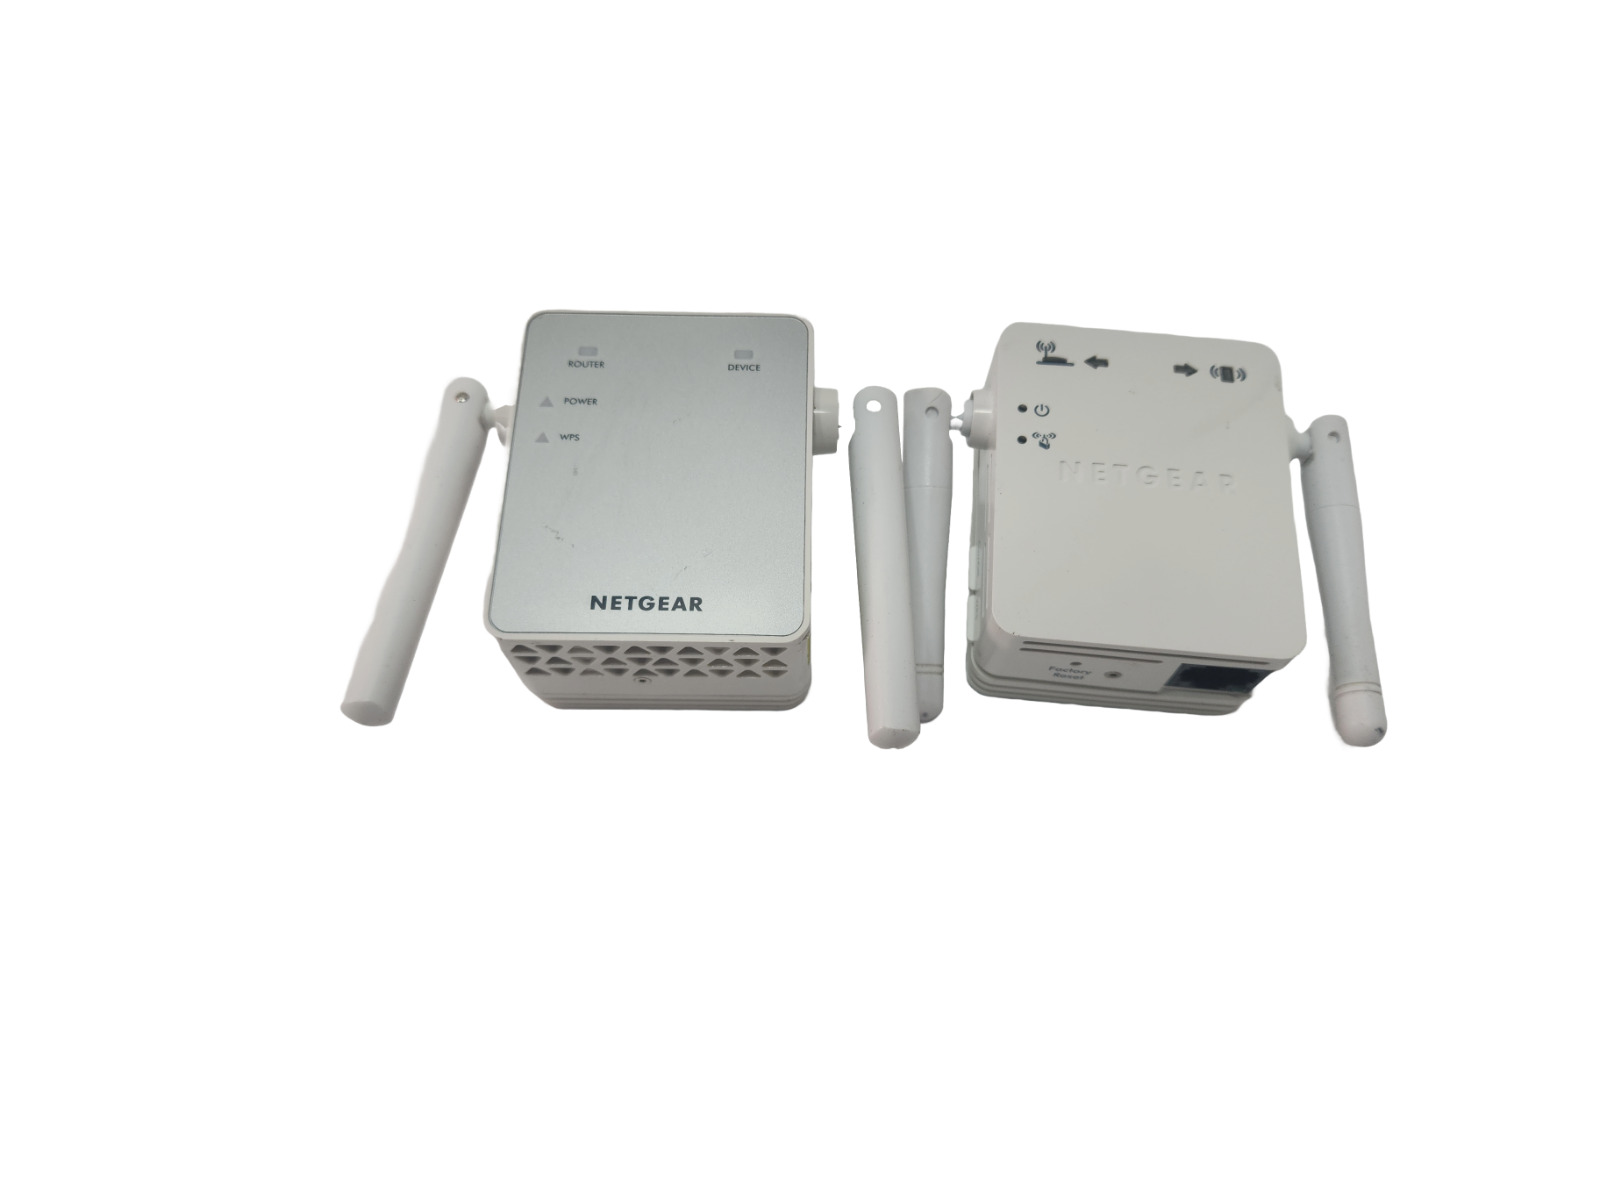 Netgear Wireless Dual Band Range Extender Two Models EX3700 WN3000RPv2